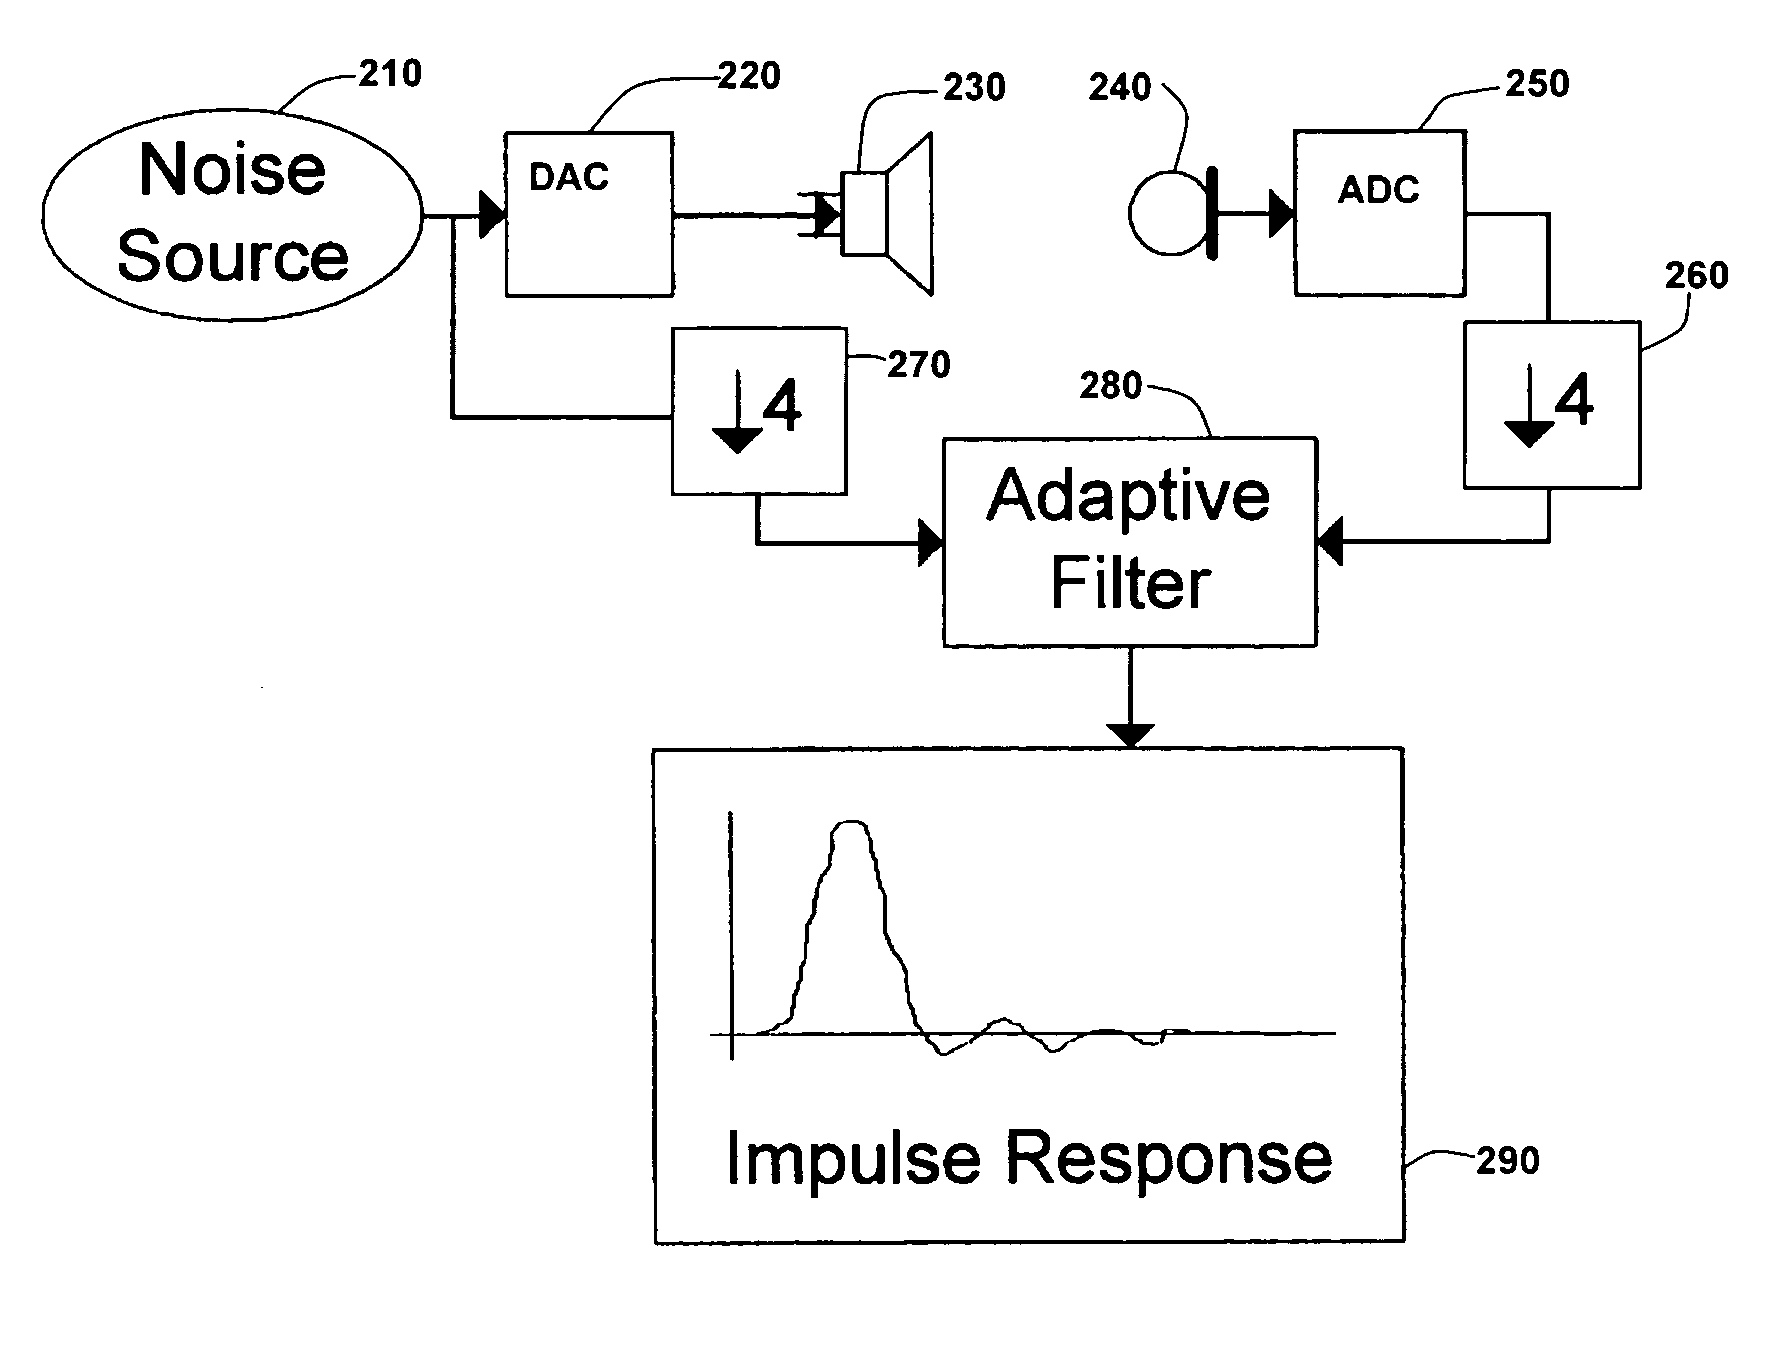 Speaker distance measurement using downsampled adaptive filter